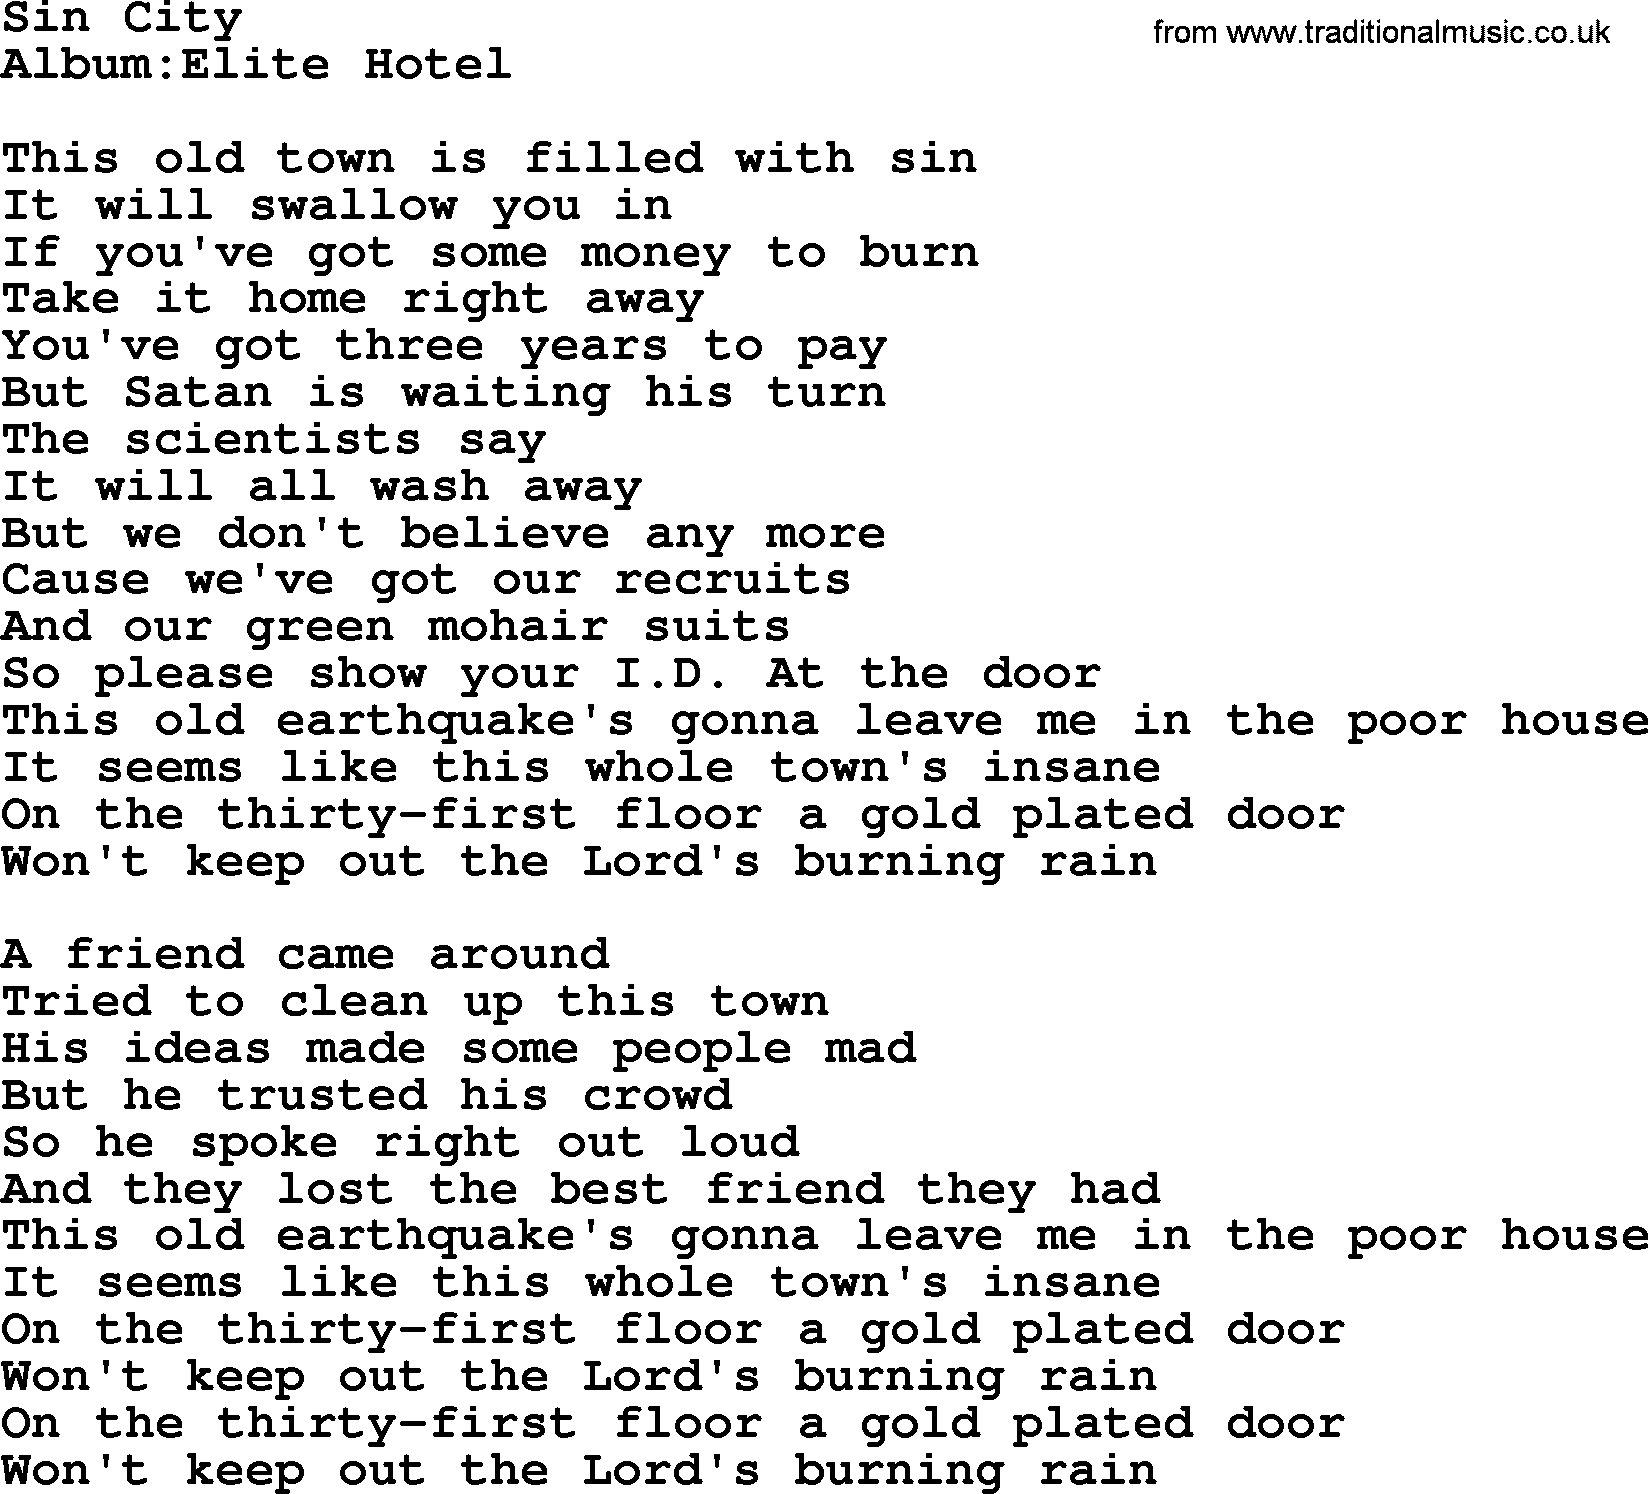 Emmylou Harris song: Sin City lyrics